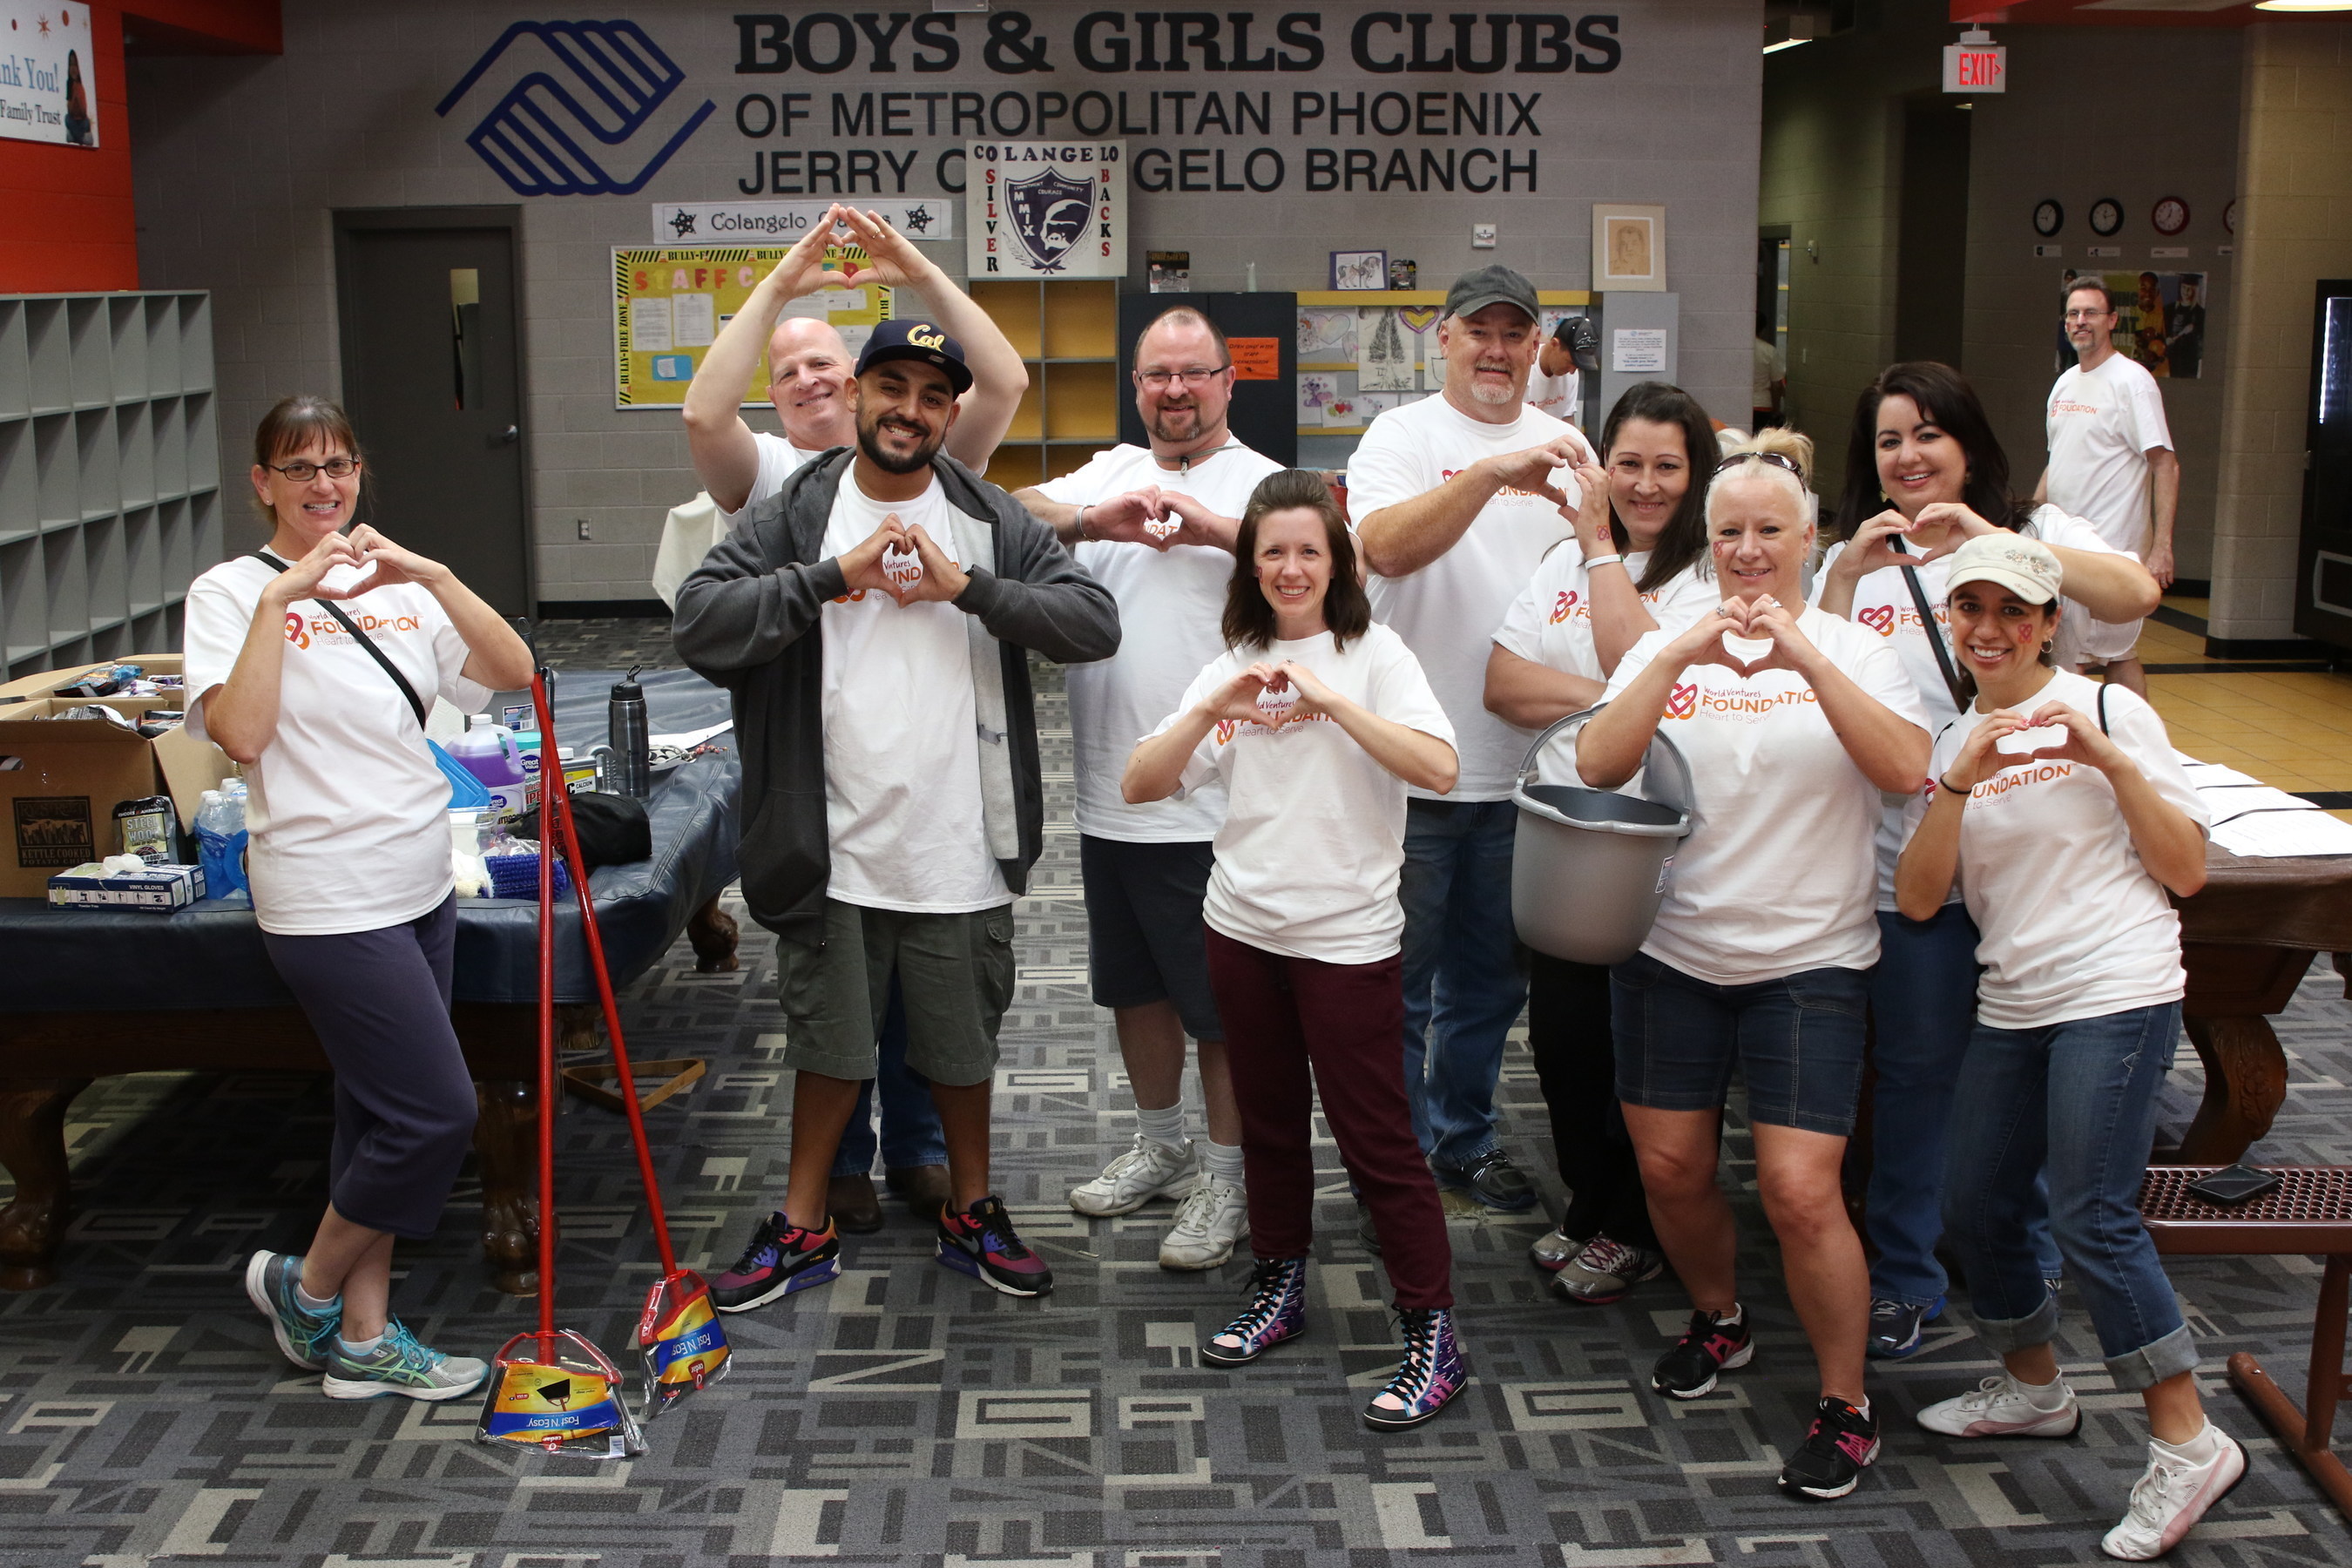 WorldVentures Representatives volunteer at Phoenix Metro area Boys & Girls Clubs on April 4, 2016.